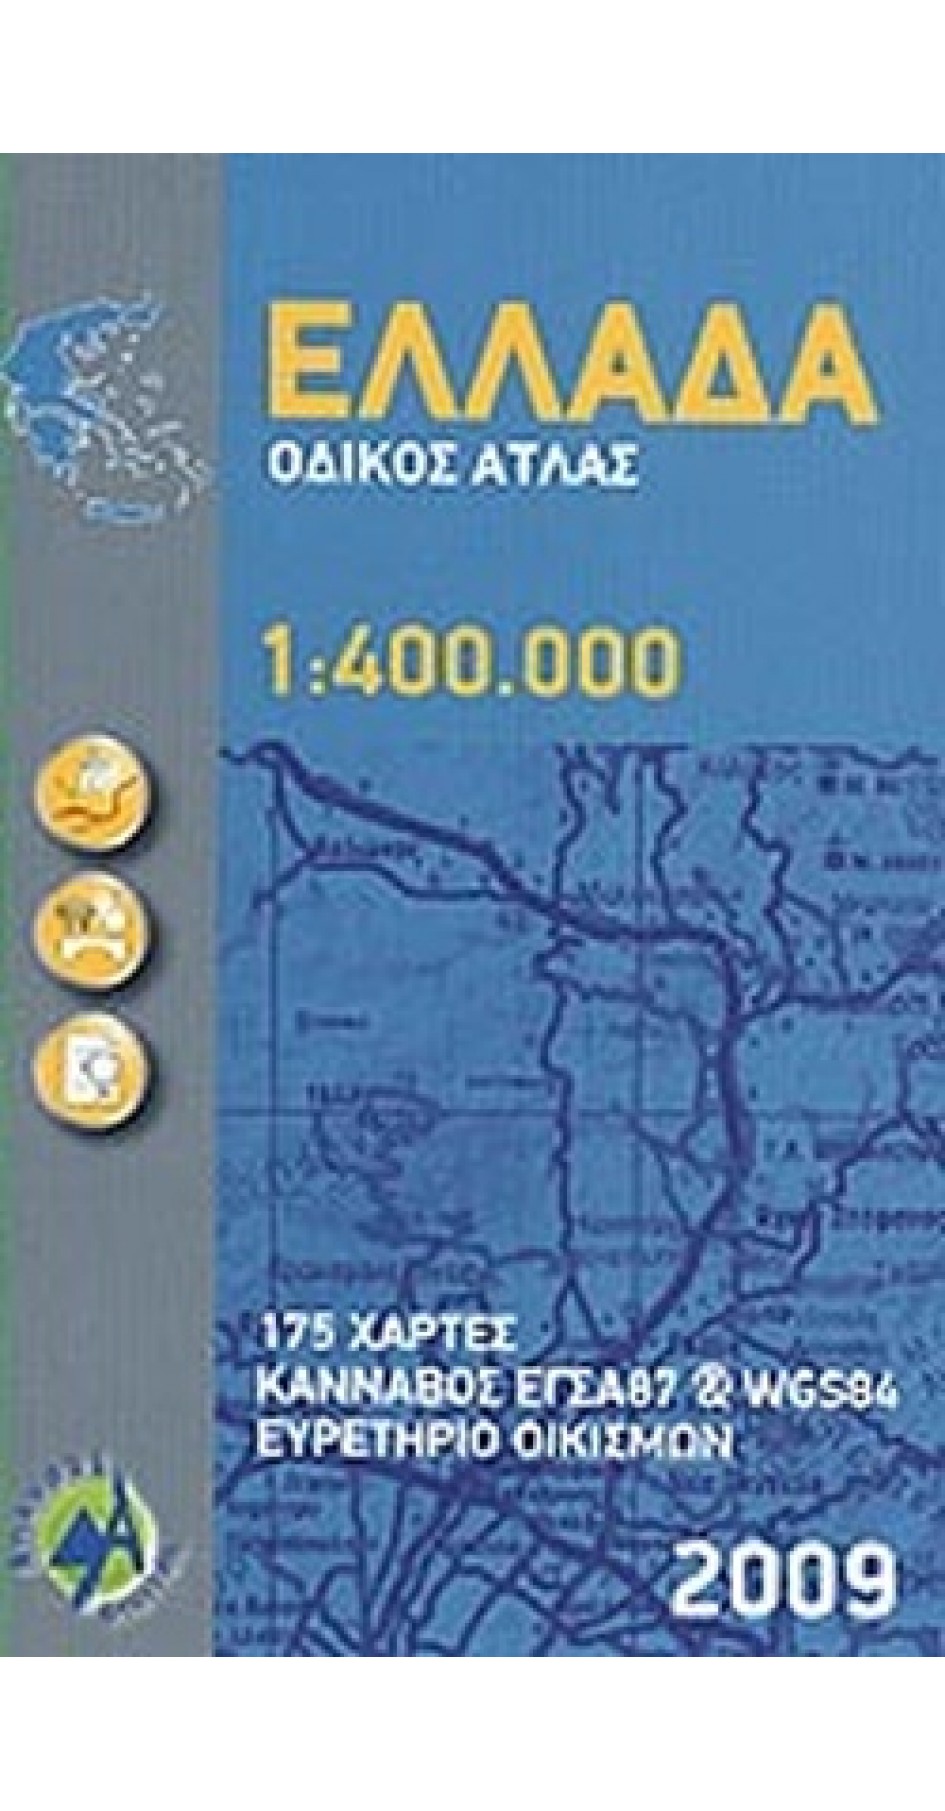 Greece road atlas 1:400 000